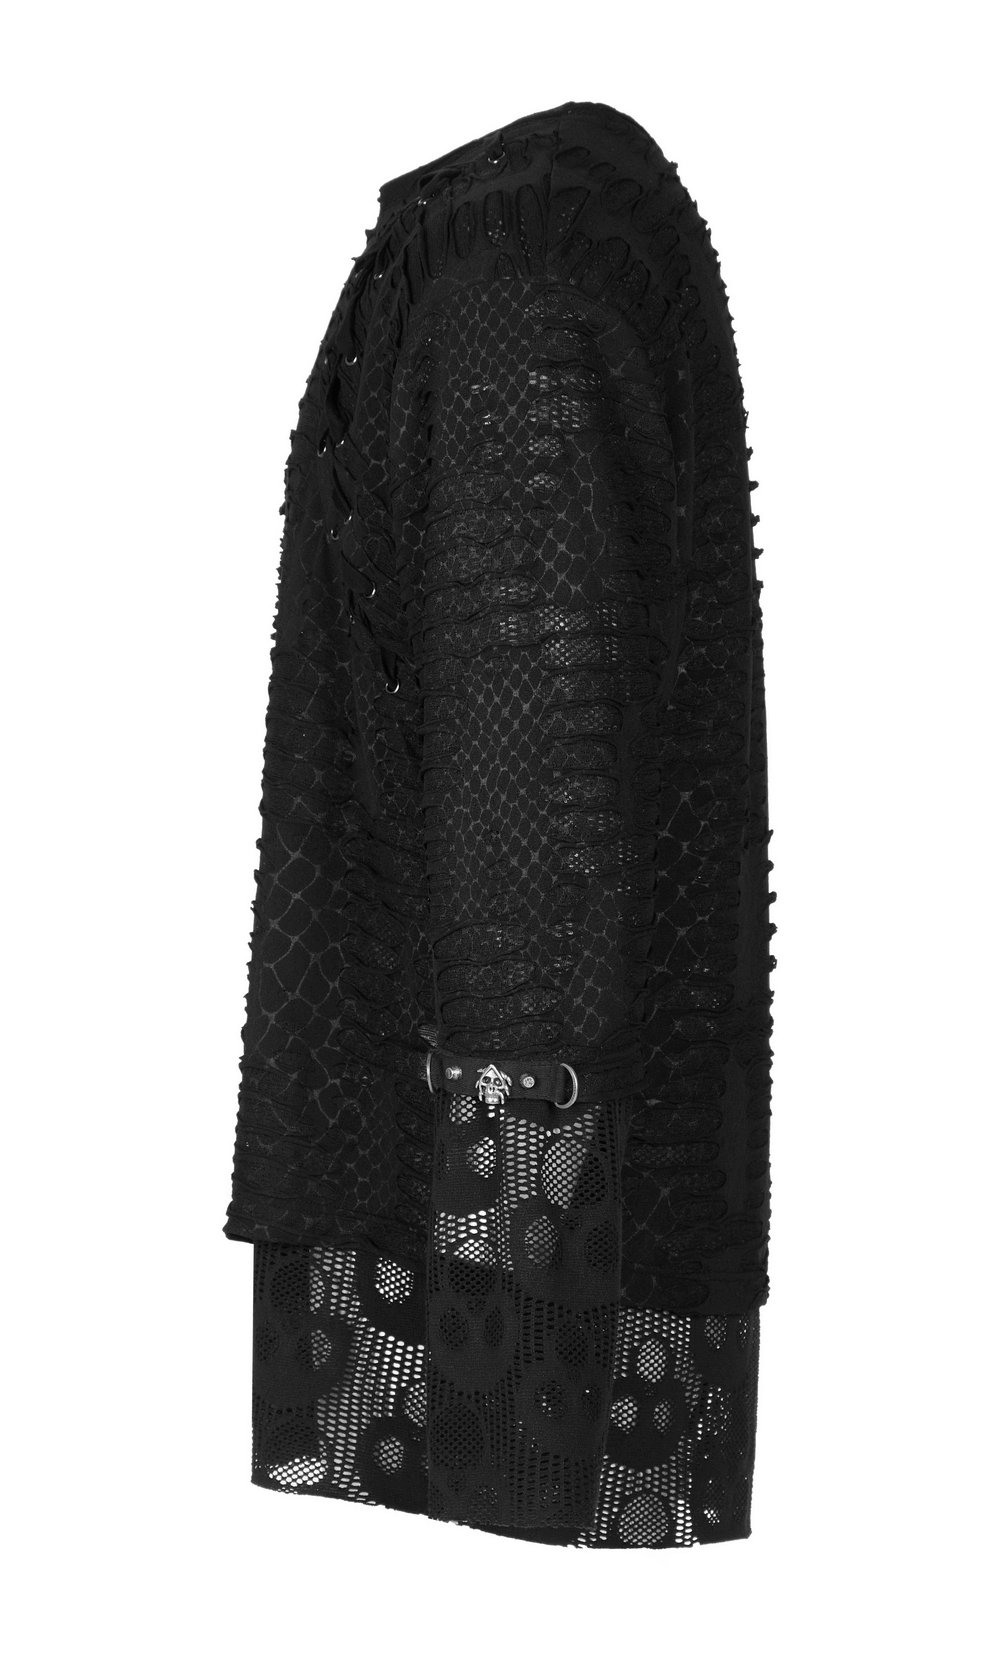 Stylish Gothic Black Lace Skull Long Sleeves Top